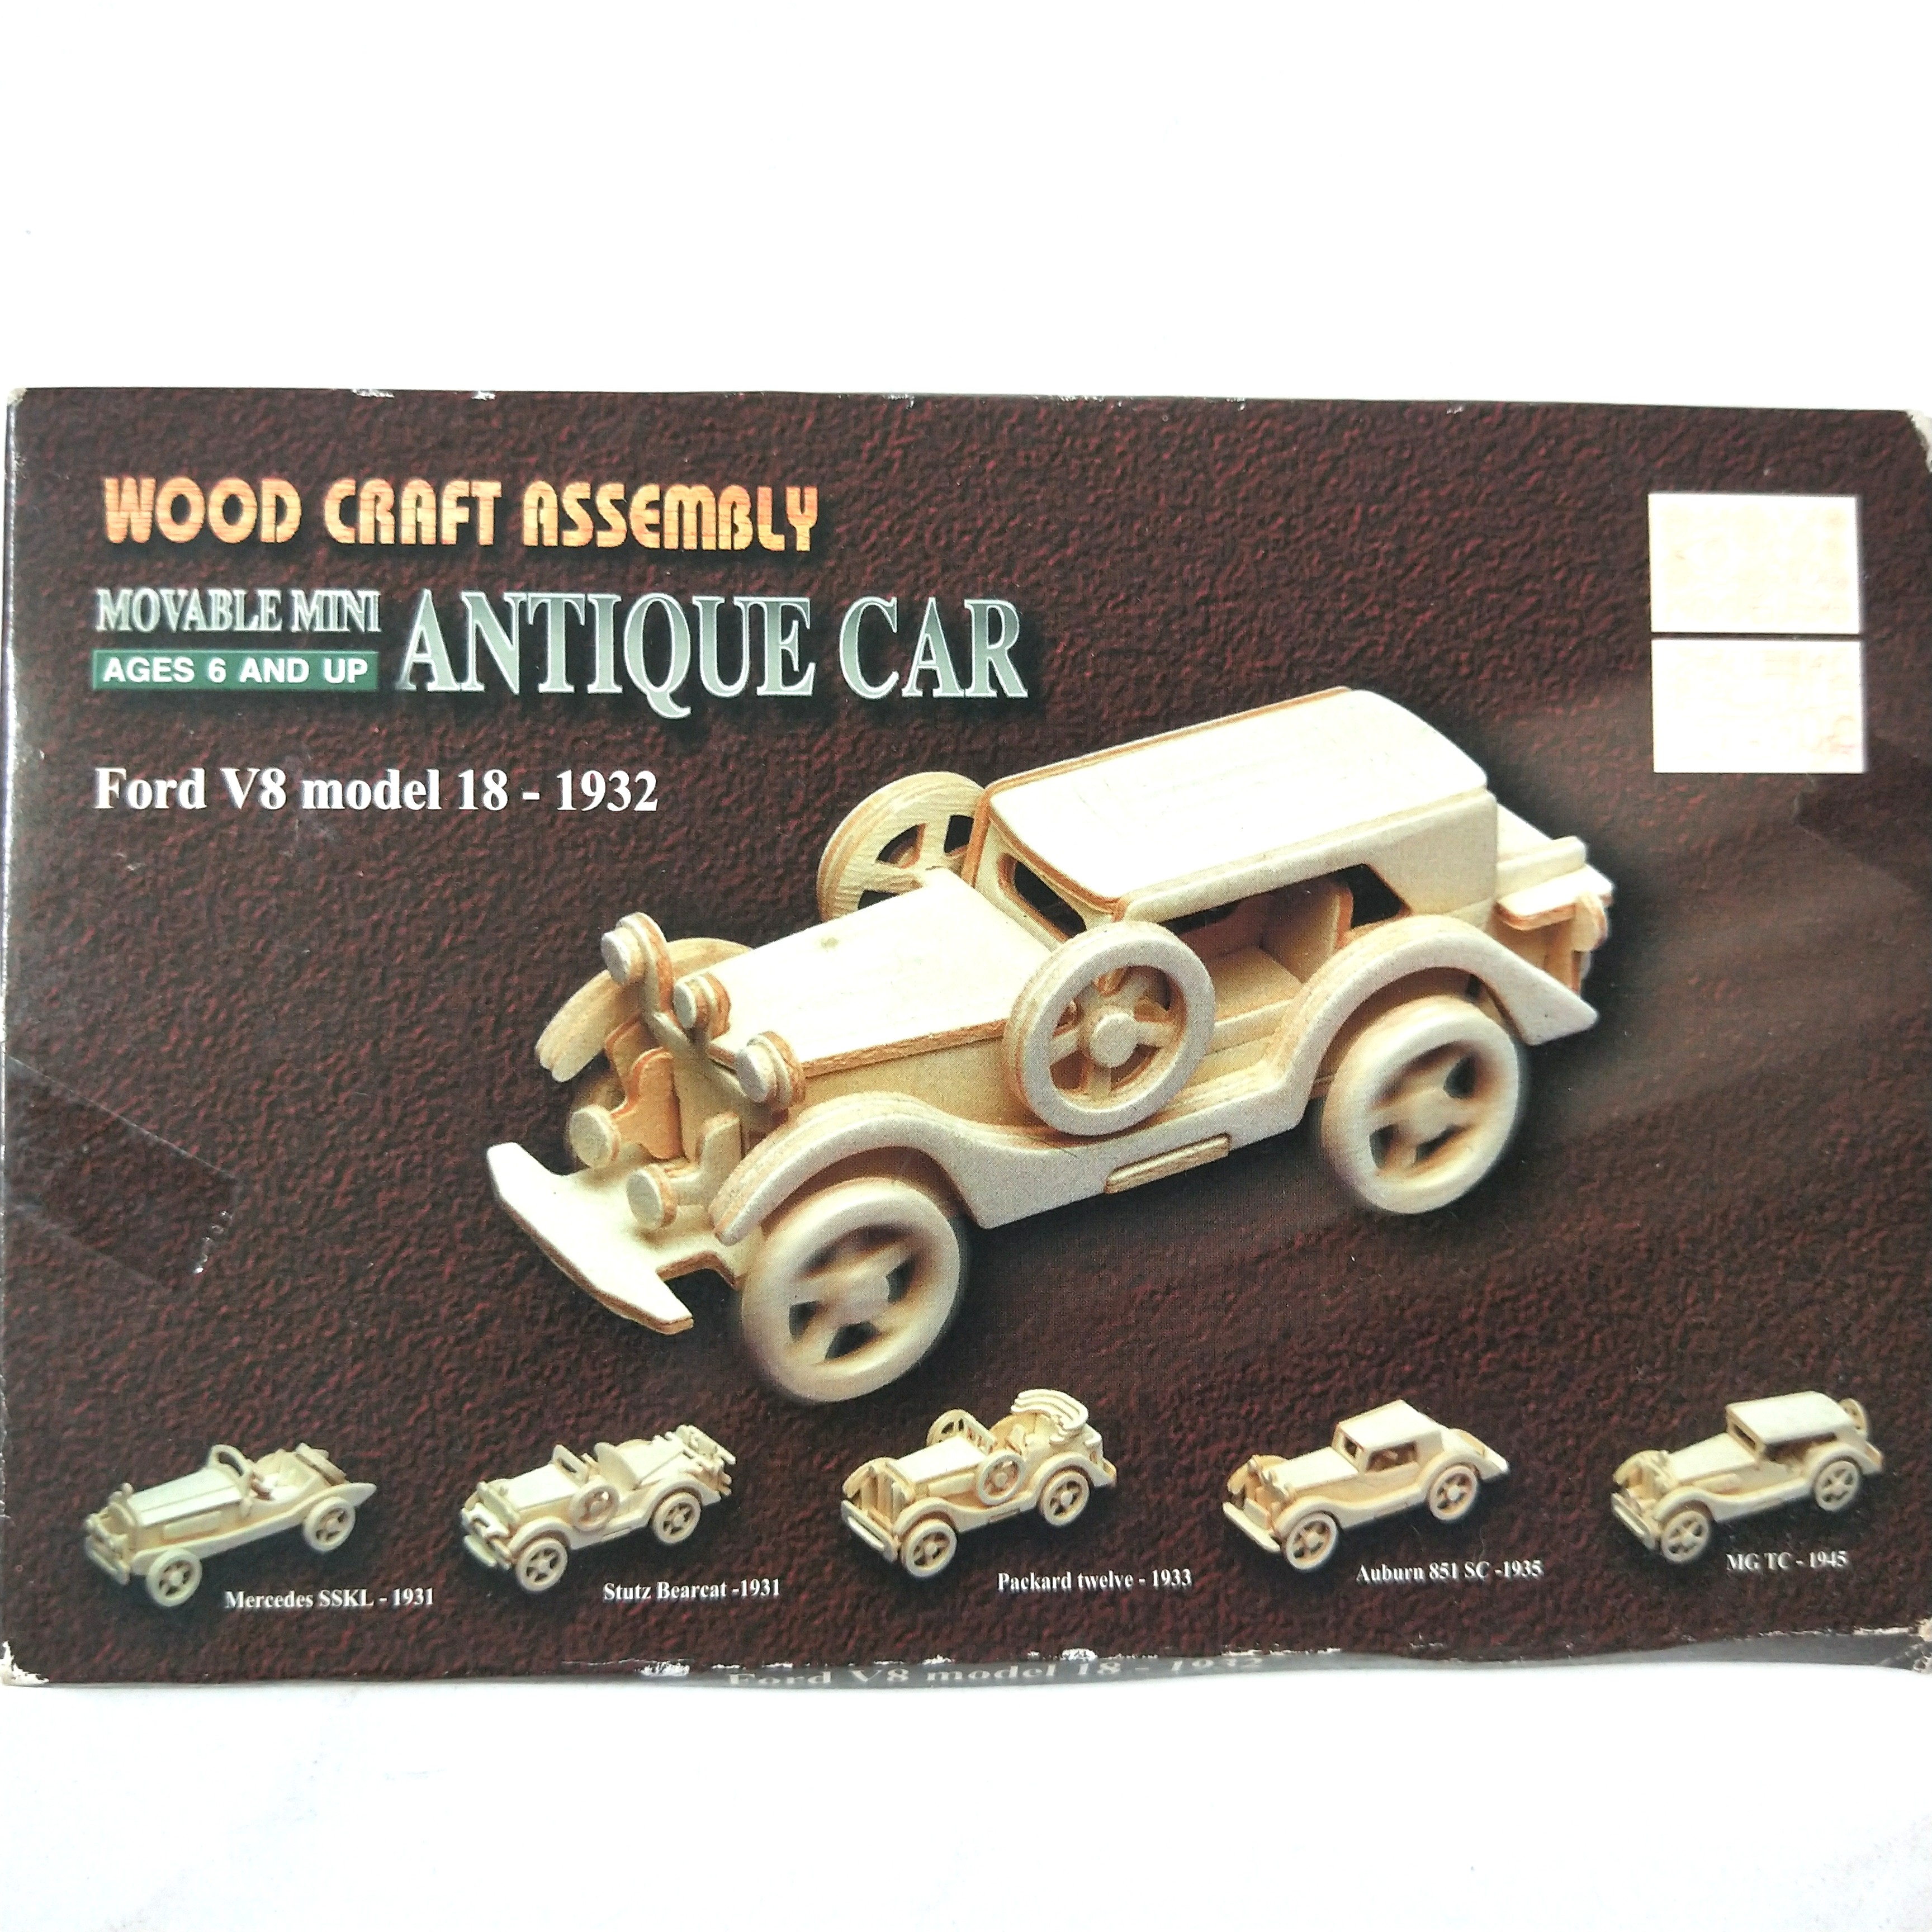 BNIB Wood Craft Assembly Movable Mini Antique Car, Ford V8 